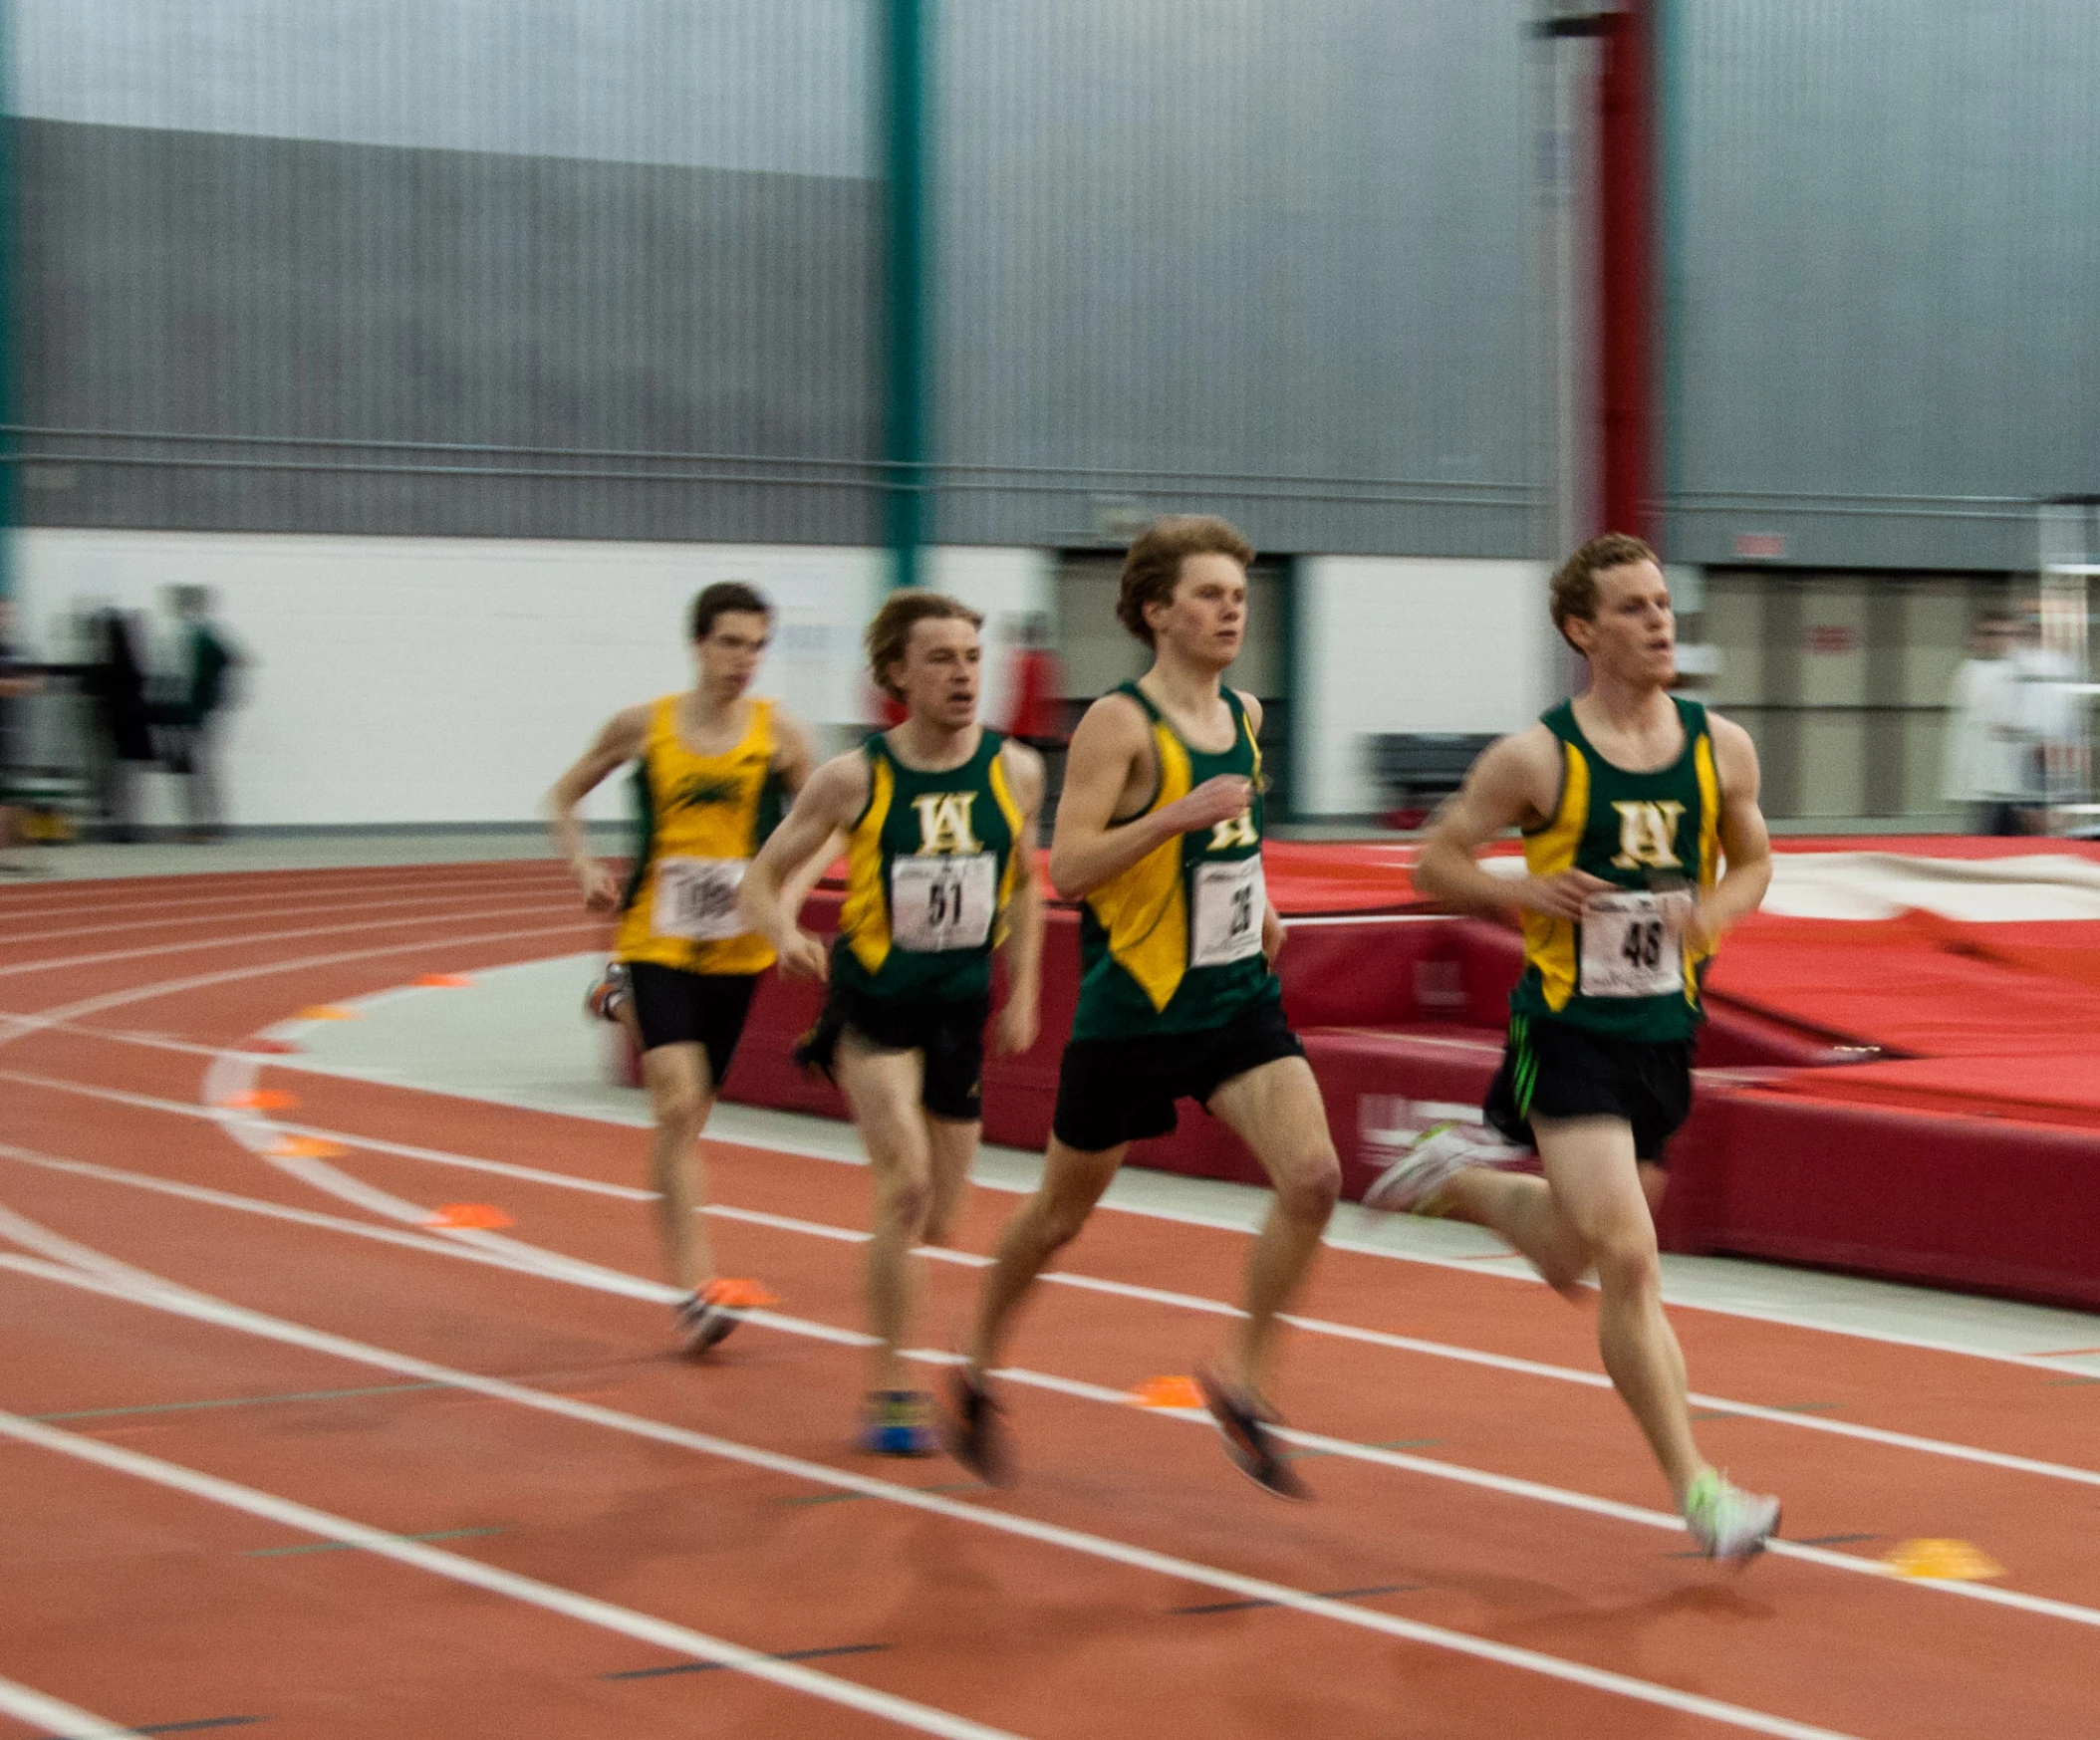 four men run a race on the track